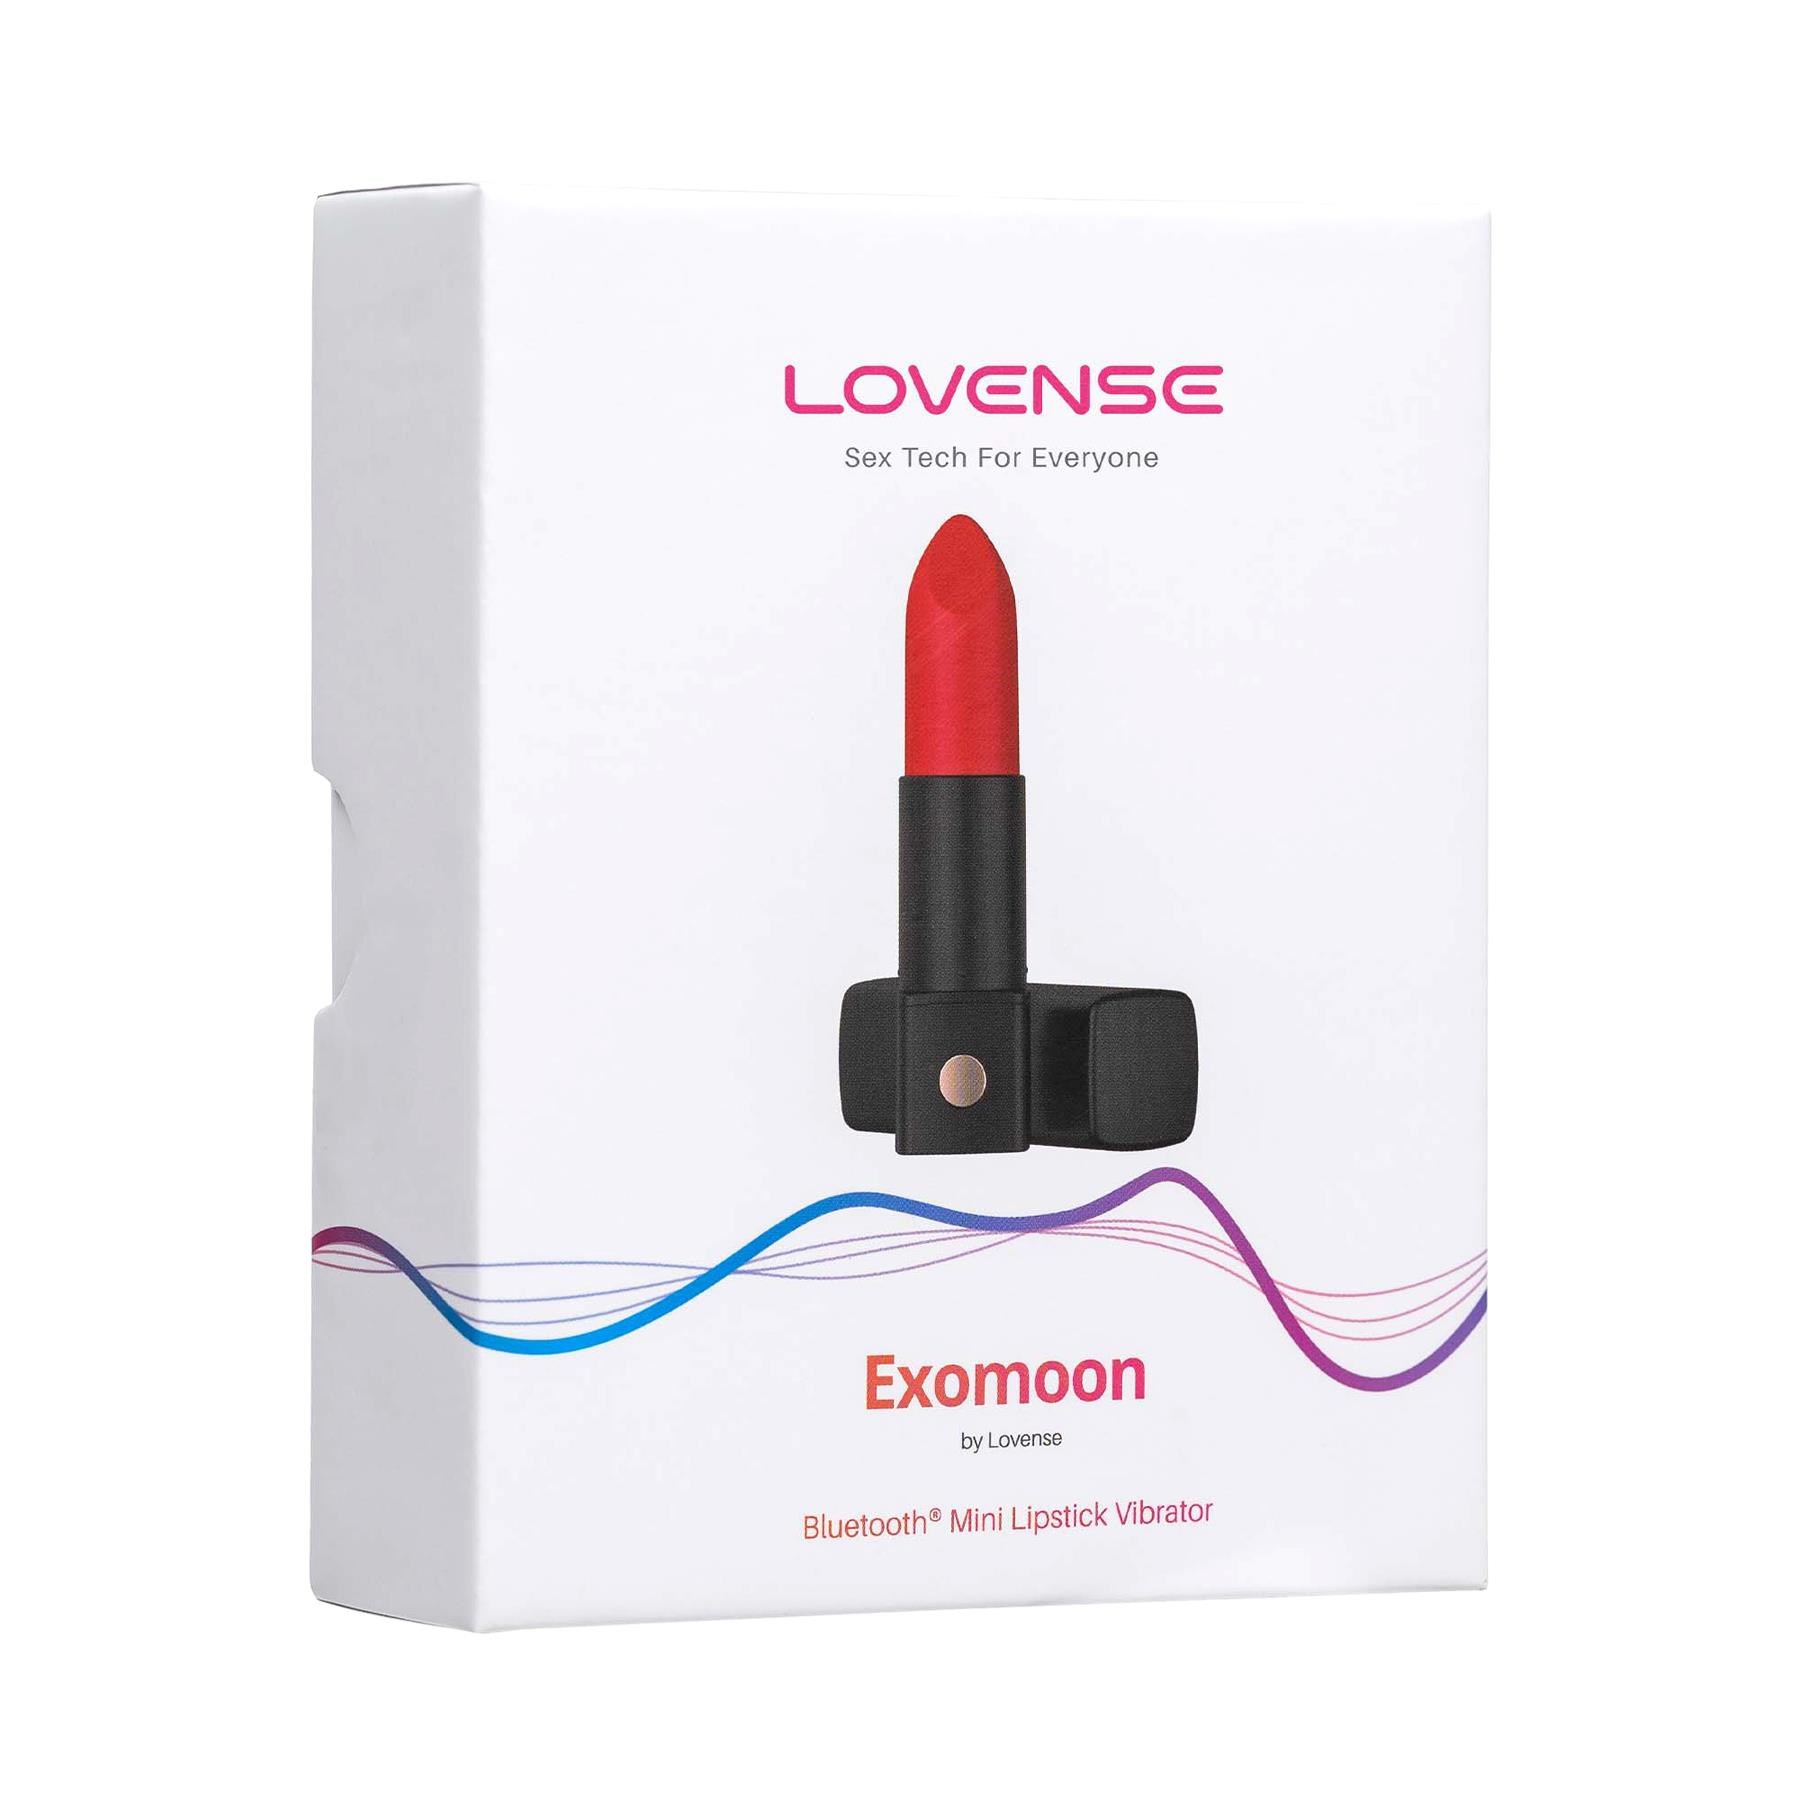 Lovense Bluetooth Exomoon Lipstick Vibrator- Packaging